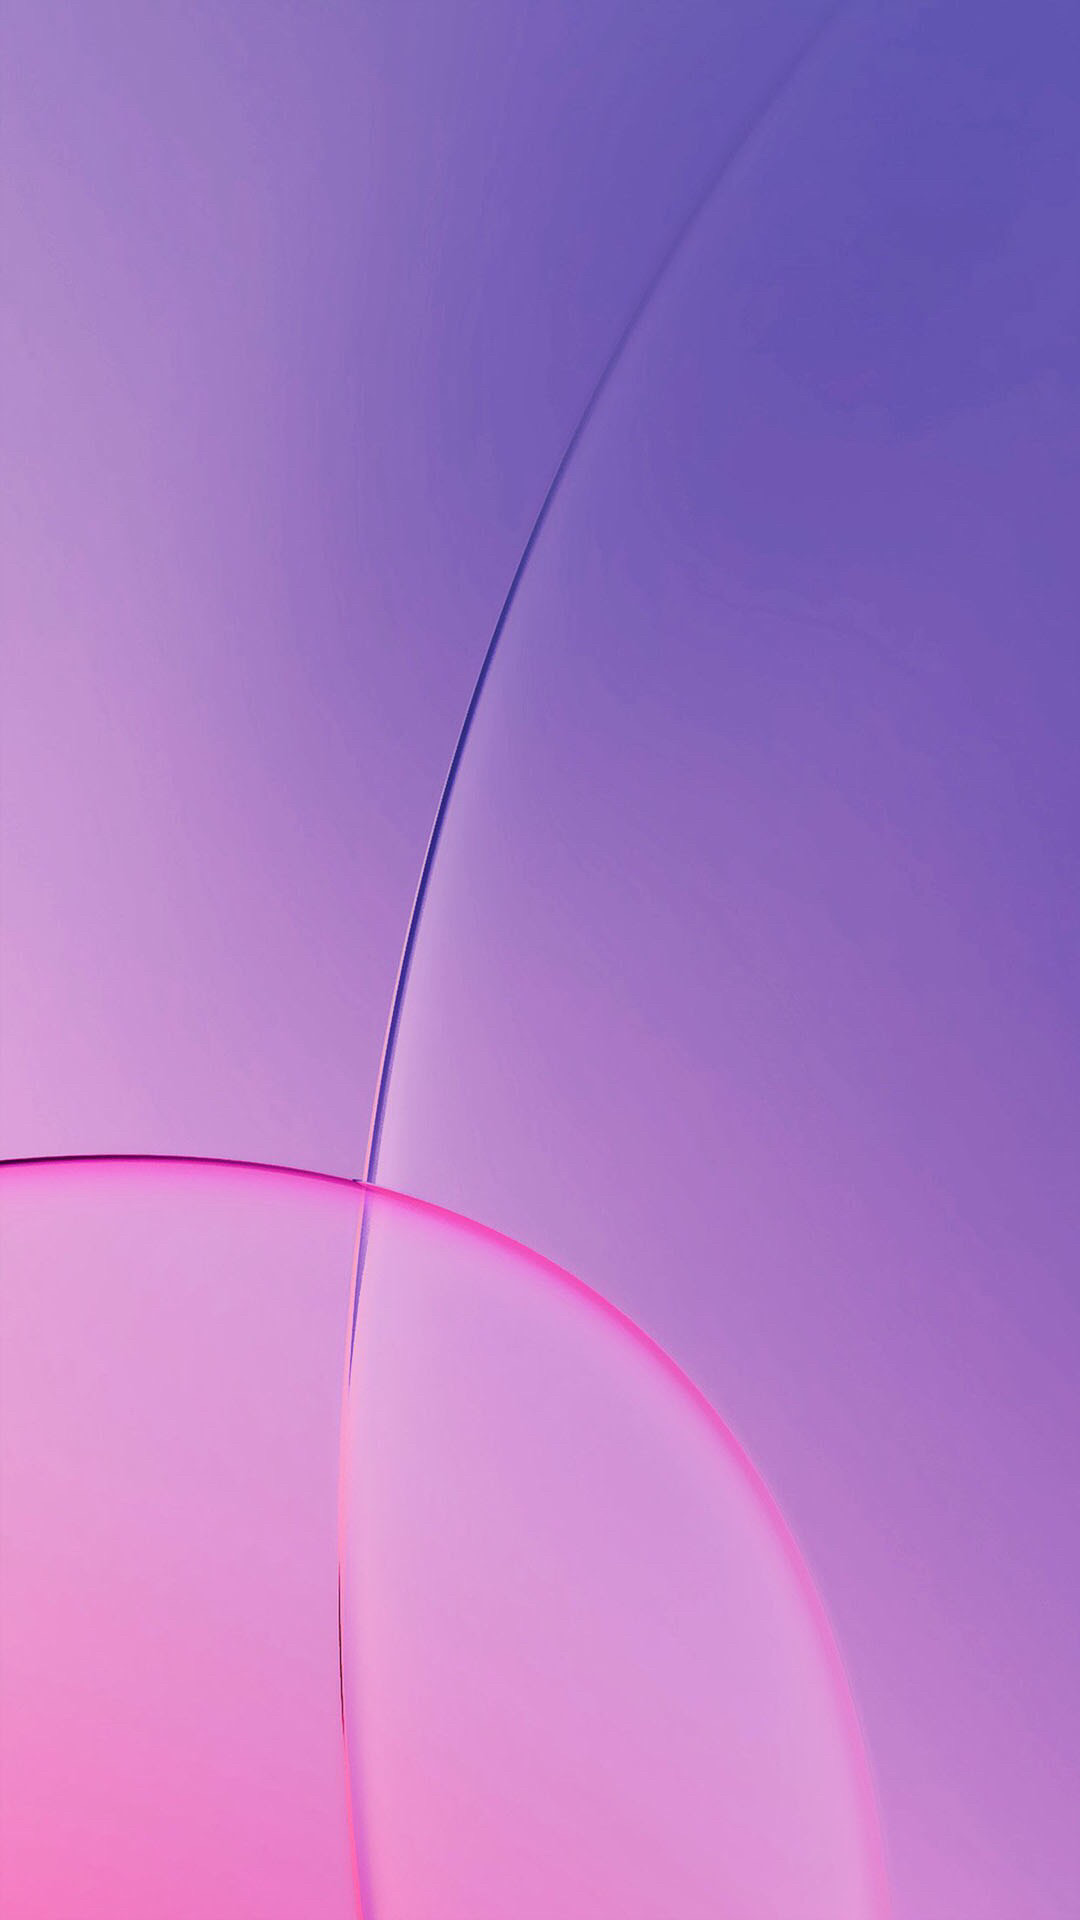 1080x1920 Pink & purple wallpaper